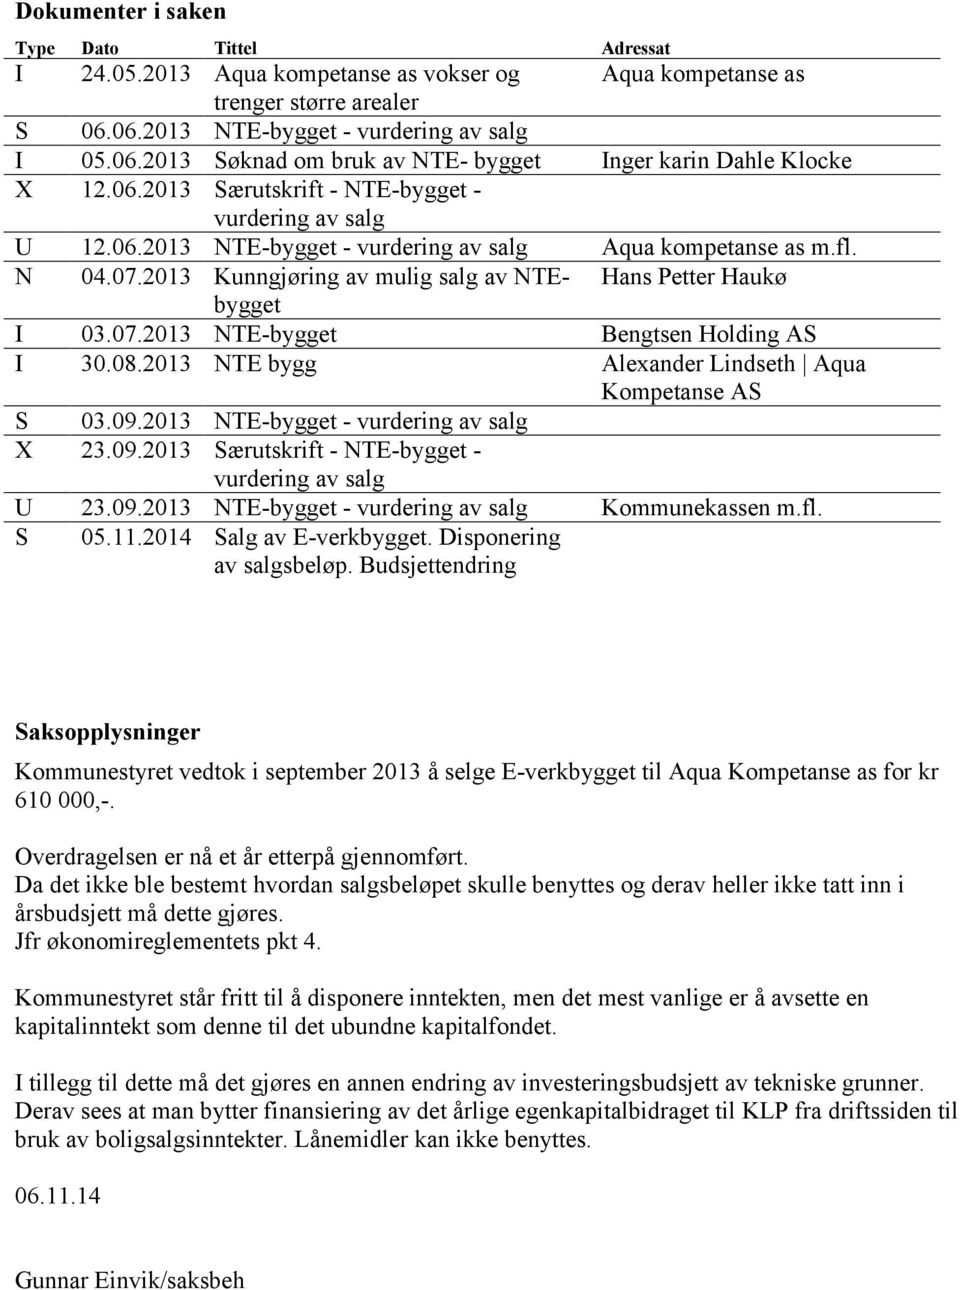 08.2013 NTE bygg Alexander Lindseth Aqua Kompetanse AS S 03.09.2013 NTE-bygget - vurdering av salg X 23.09.2013 Særutskrift - NTE-bygget - vurdering av salg U 23.09.2013 NTE-bygget - vurdering av salg Kommunekassen m.